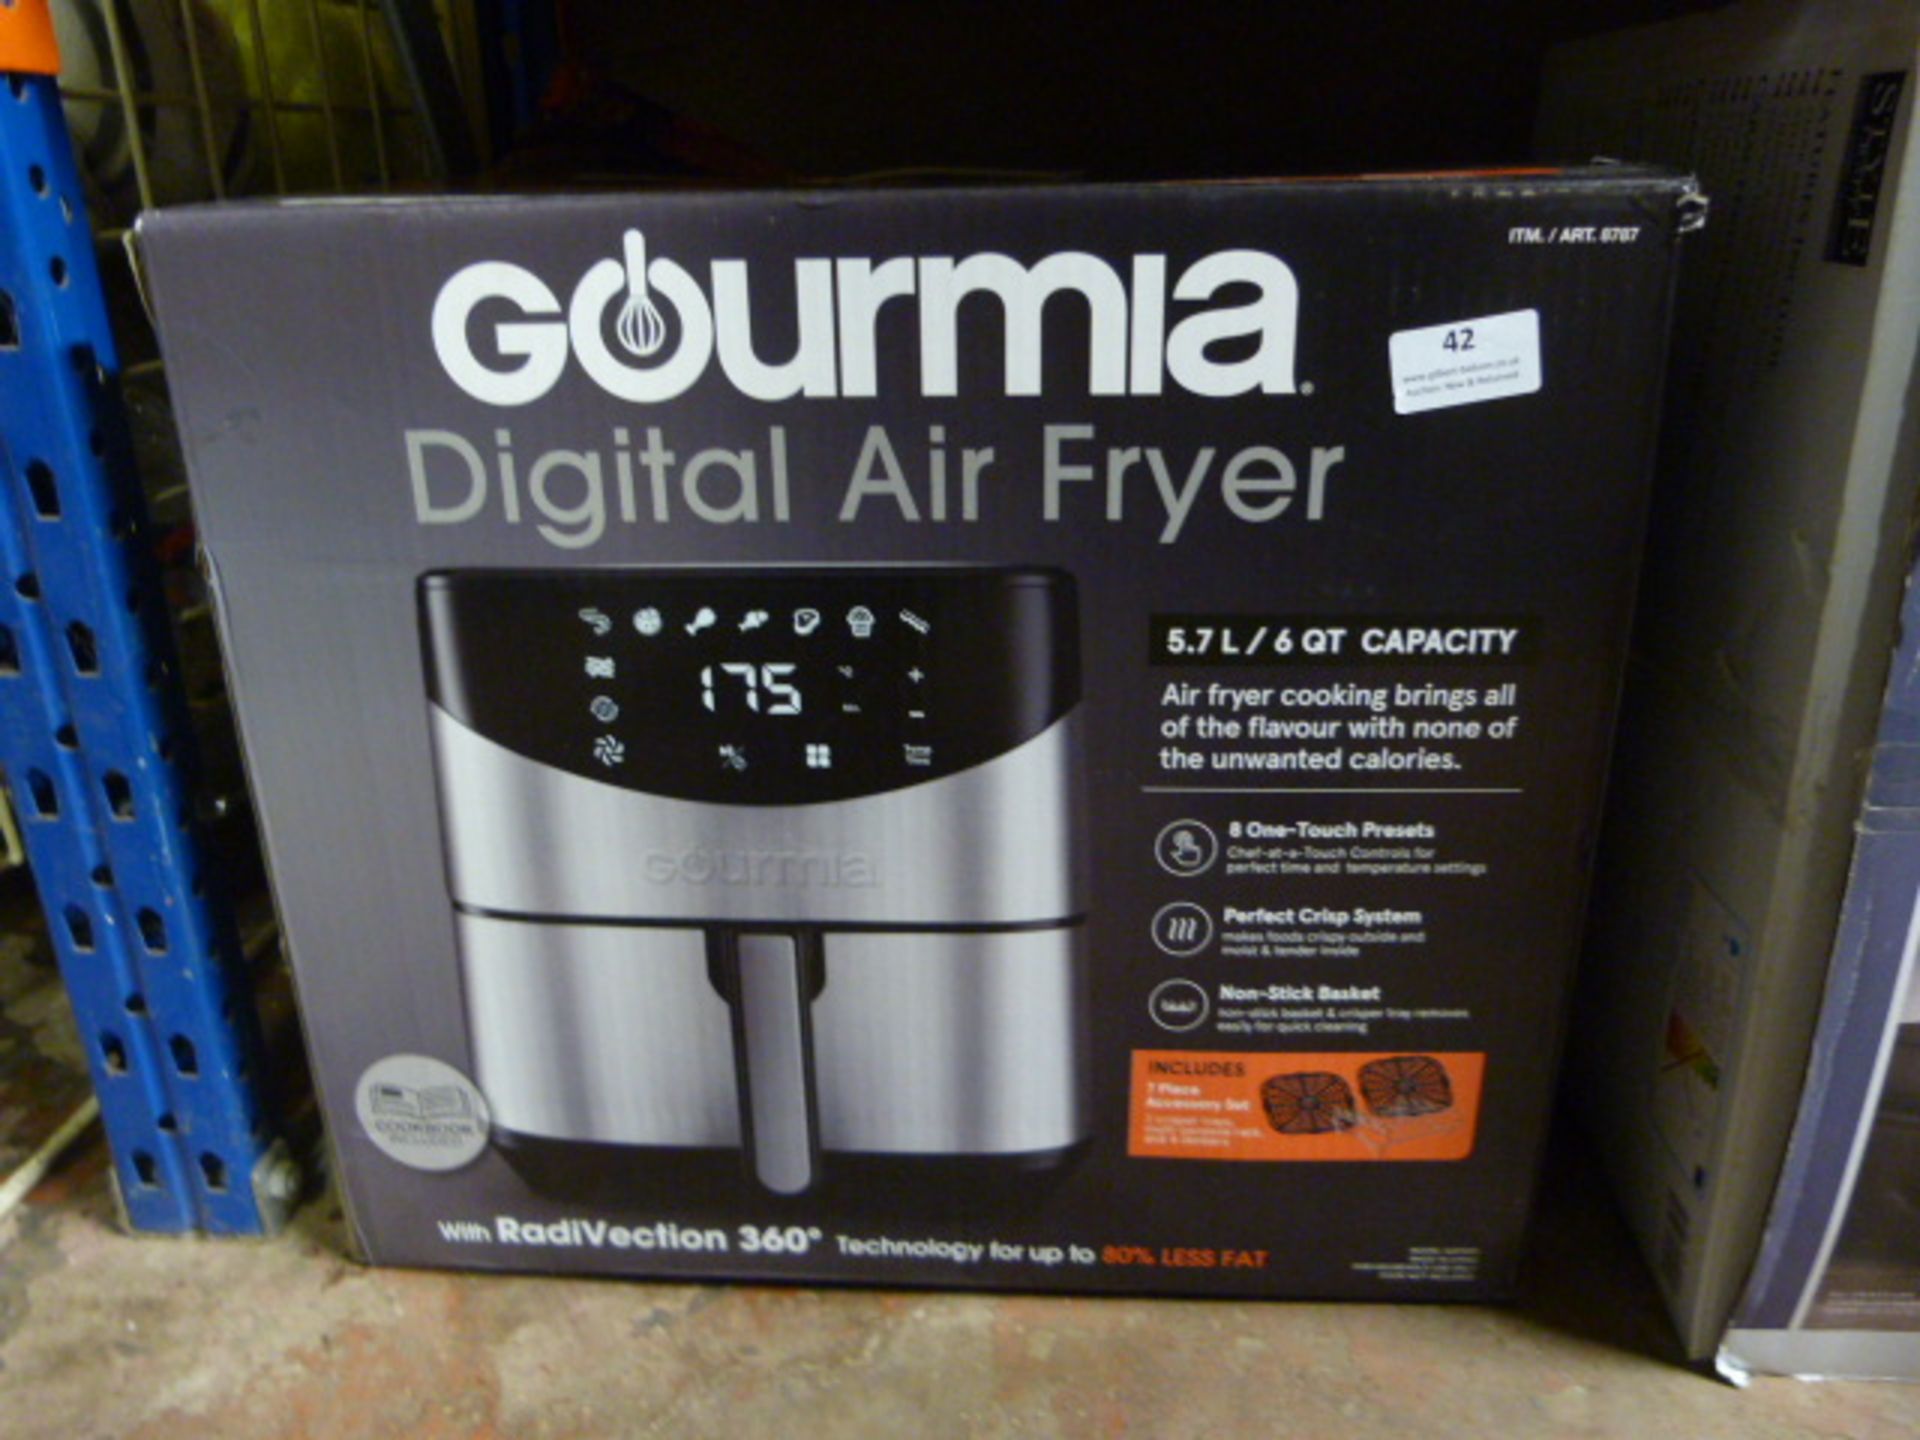 *Gourmia Digital Air Fryer 5.7L/6 quart Capacity